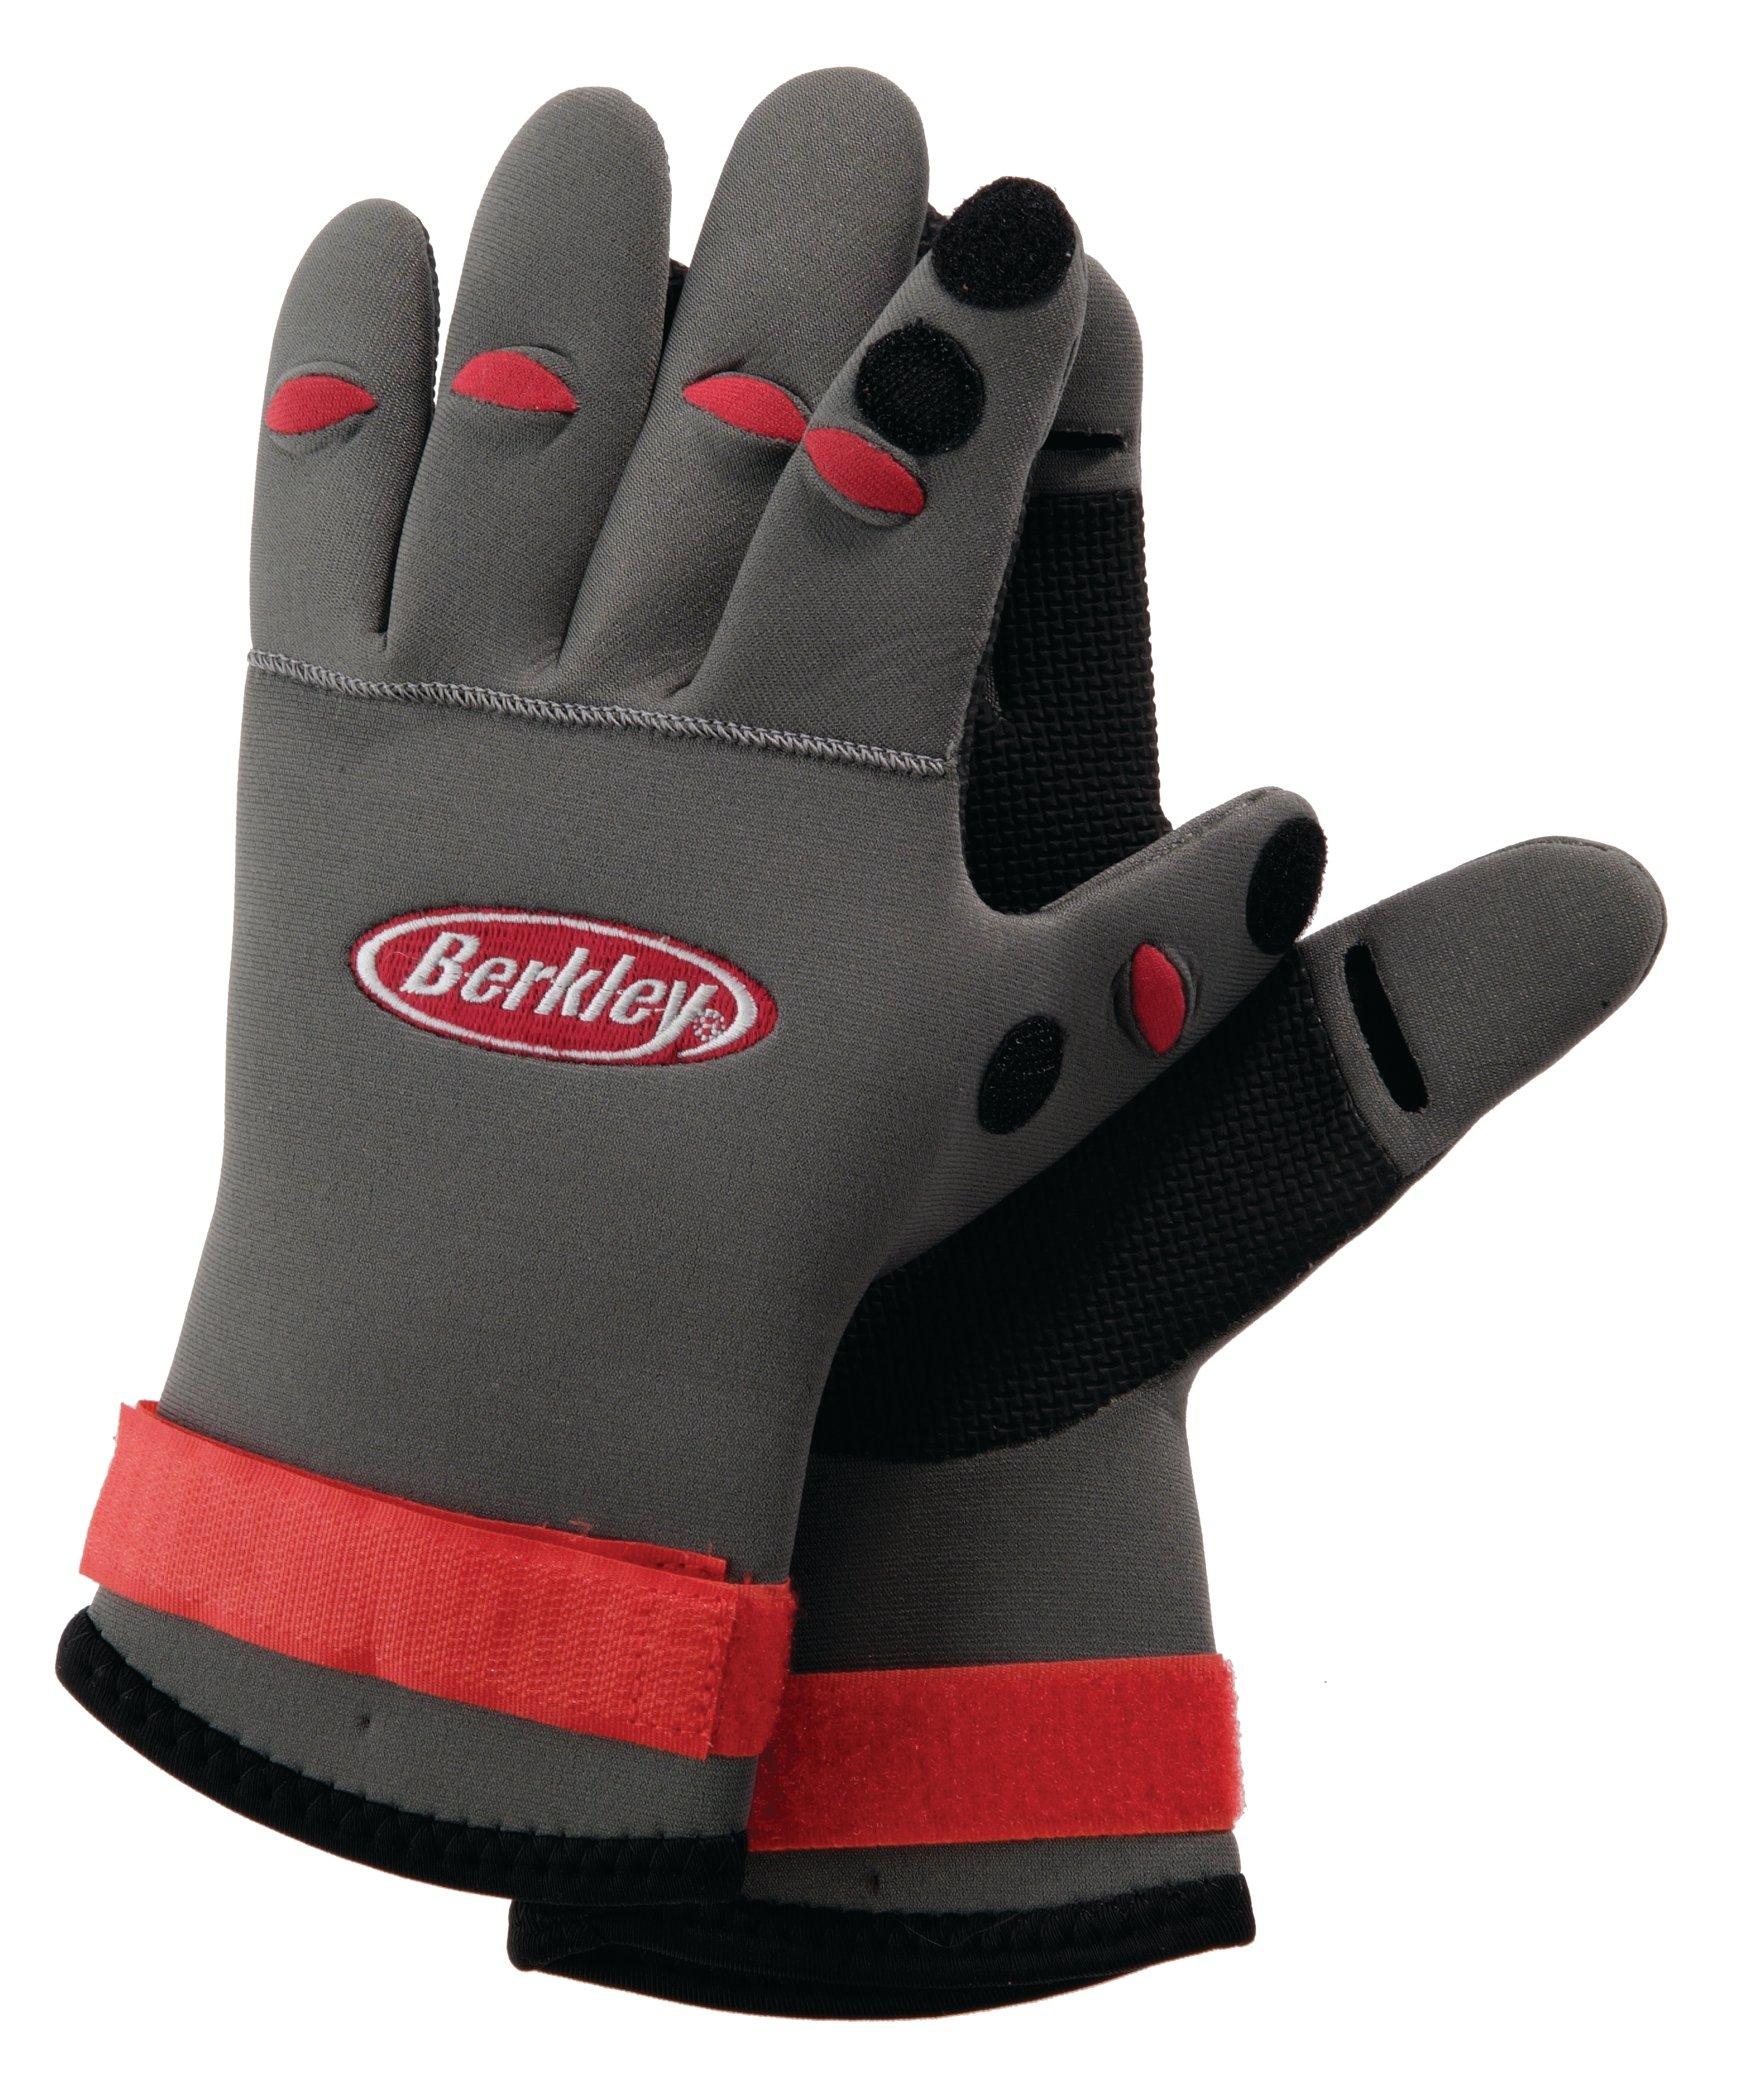 South Bend Fg-xl Lined Neoprene Fishing Gloves Black 23713 for sale online 